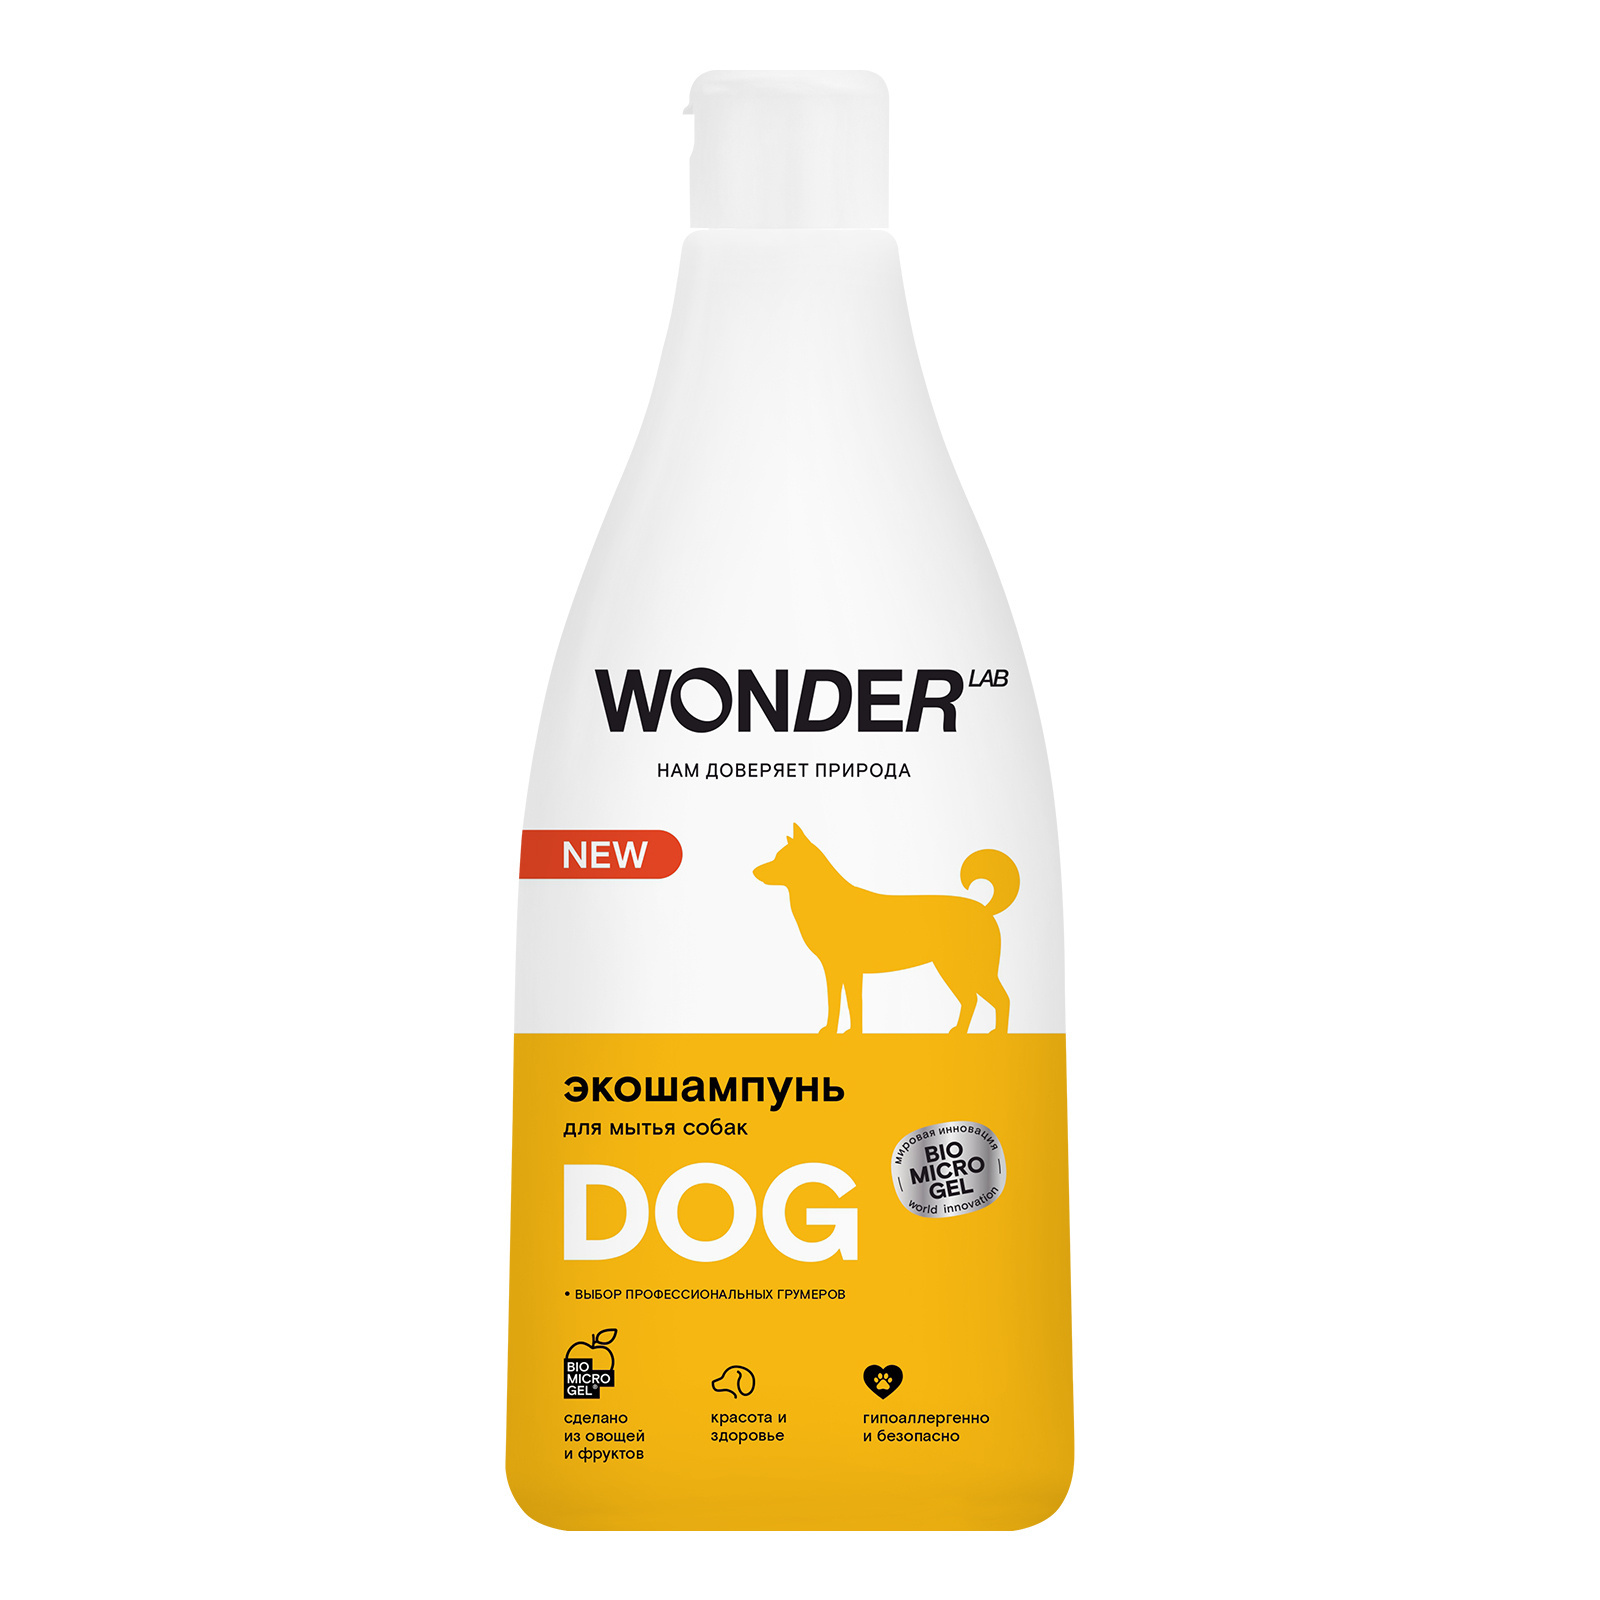 Wonder lab экошампунь для мытья собак гипоаллергенный, без запаха (1 кг) Wonder lab экошампунь для мытья собак гипоаллергенный, без запаха (1 кг) - фото 1